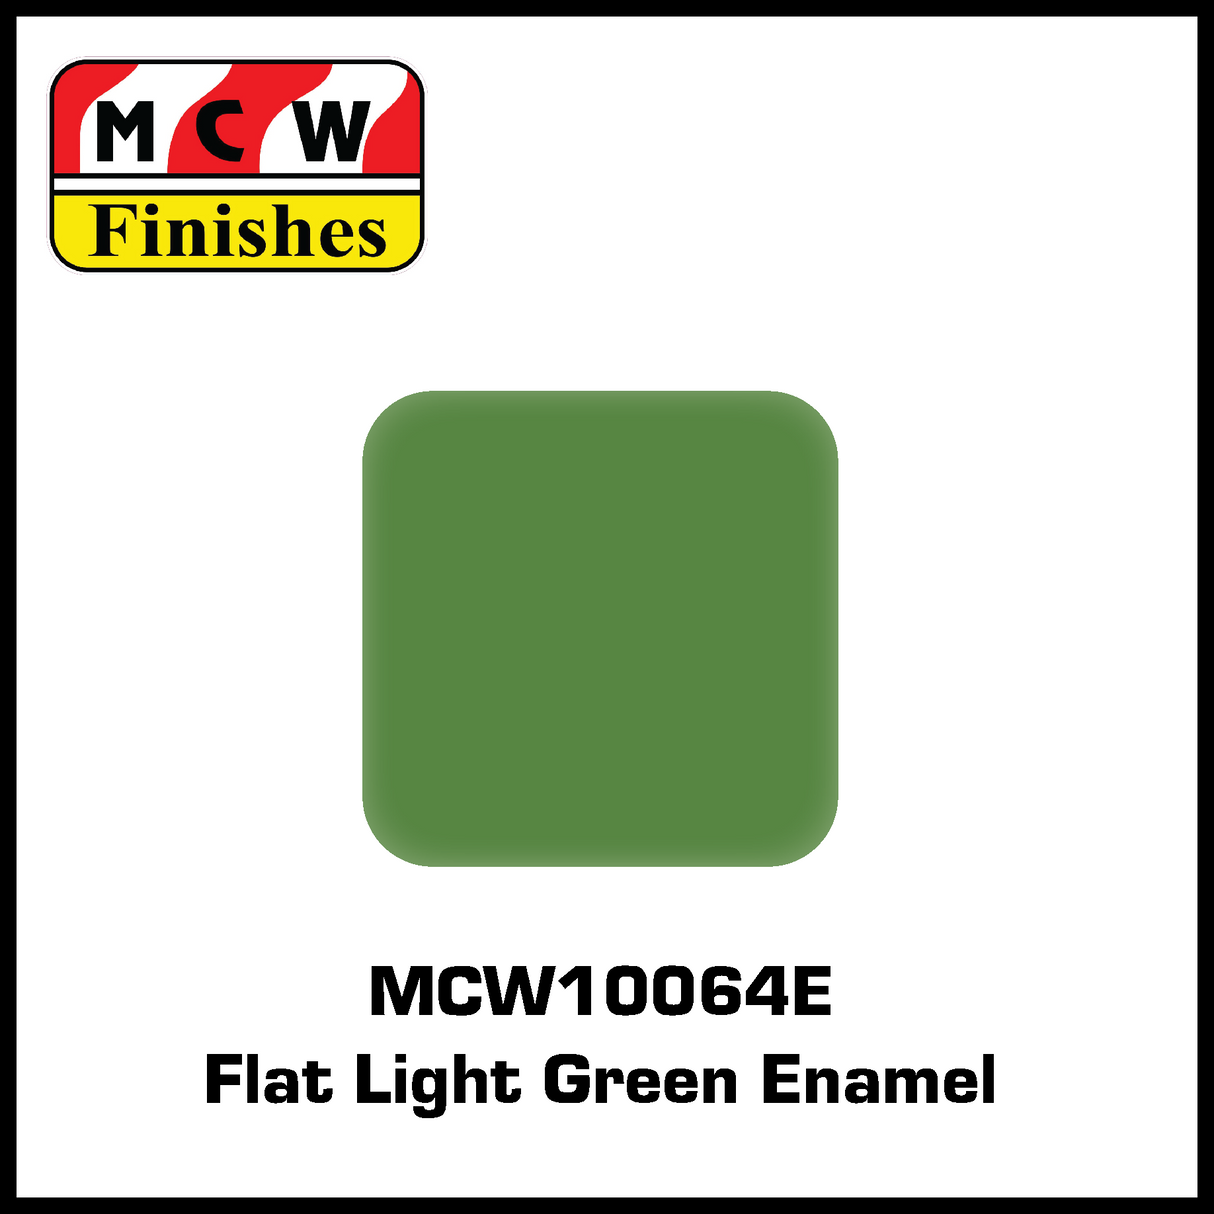 MCW Finishes Flat Light Green Enamel